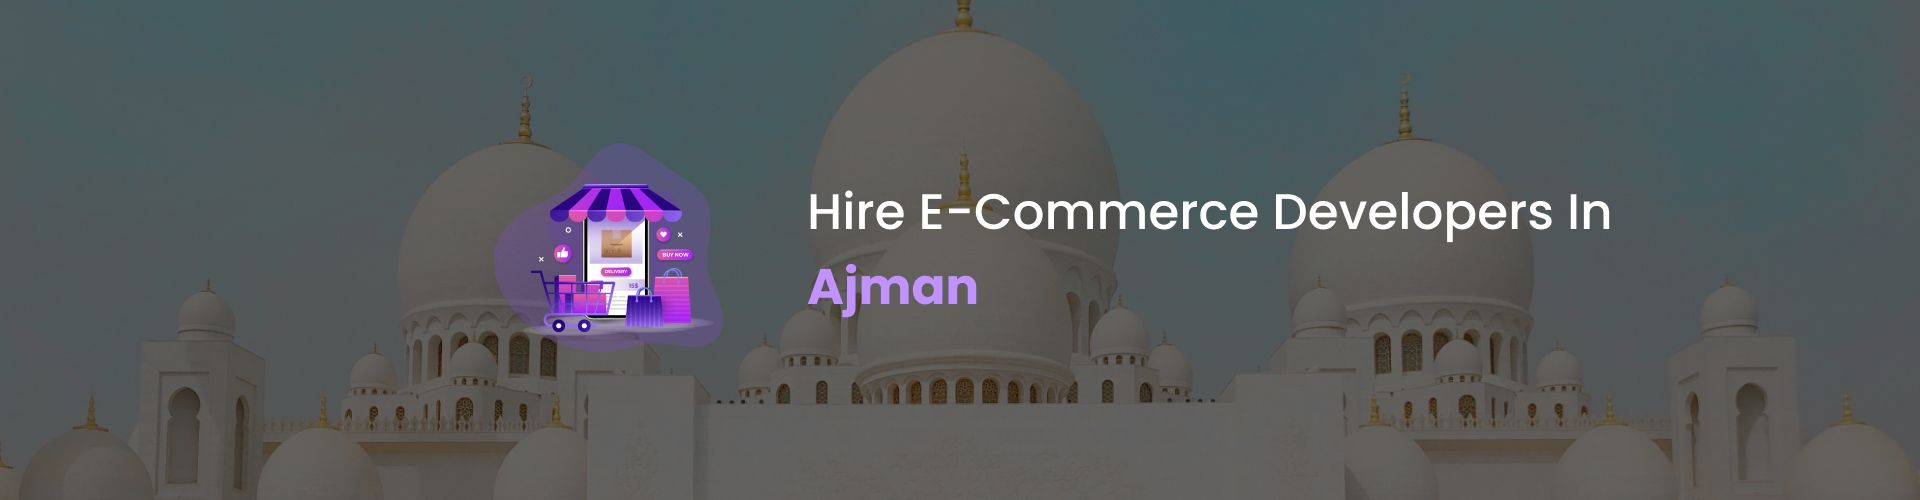 ecommerce developers ajman